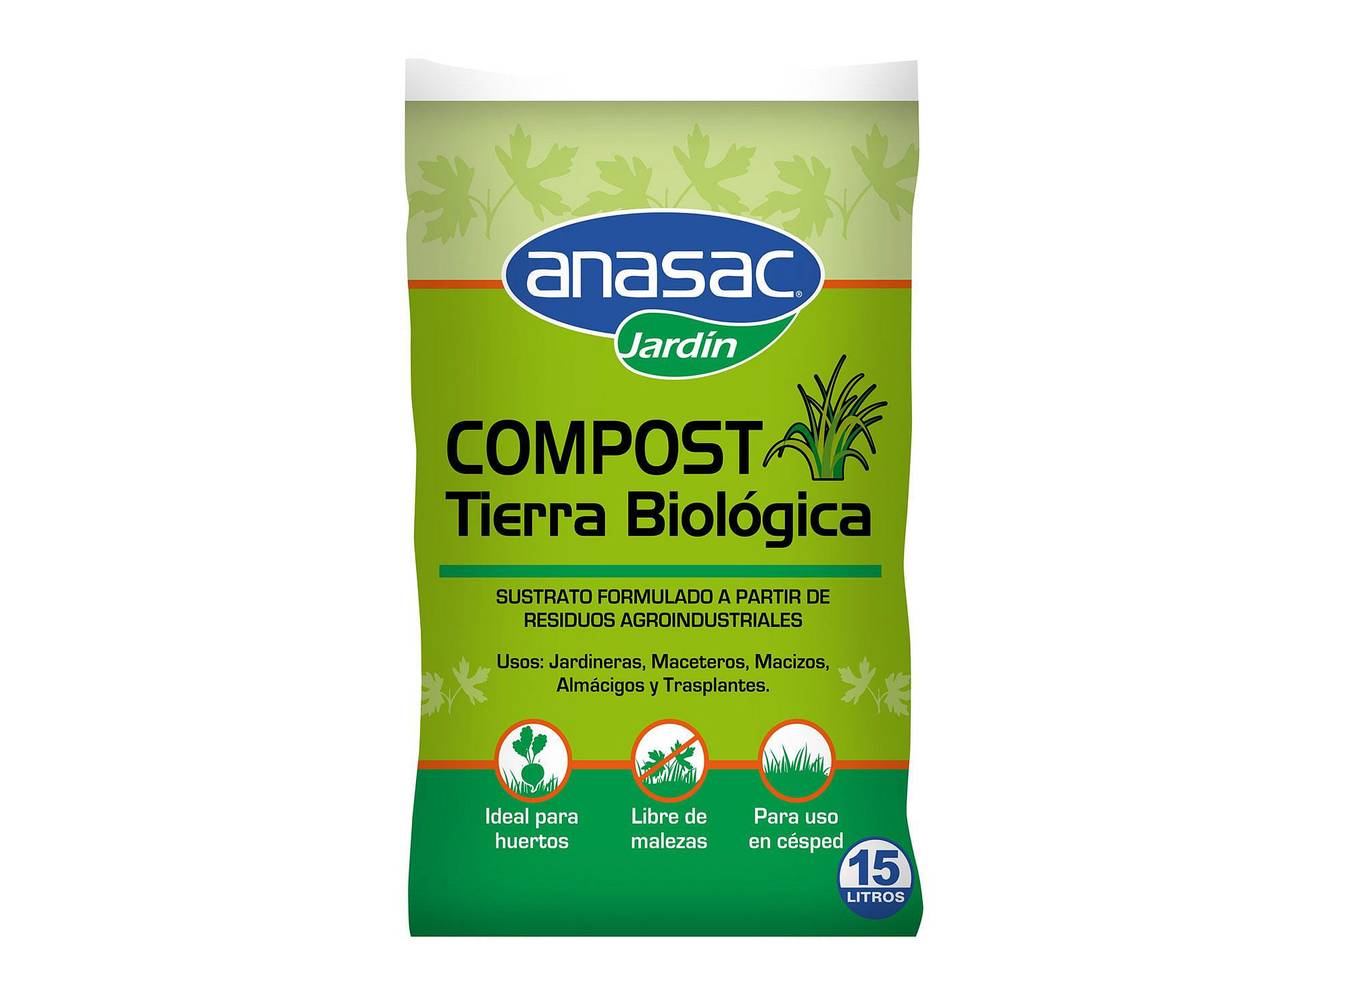 Anasac tierra biológica compost (15 l)